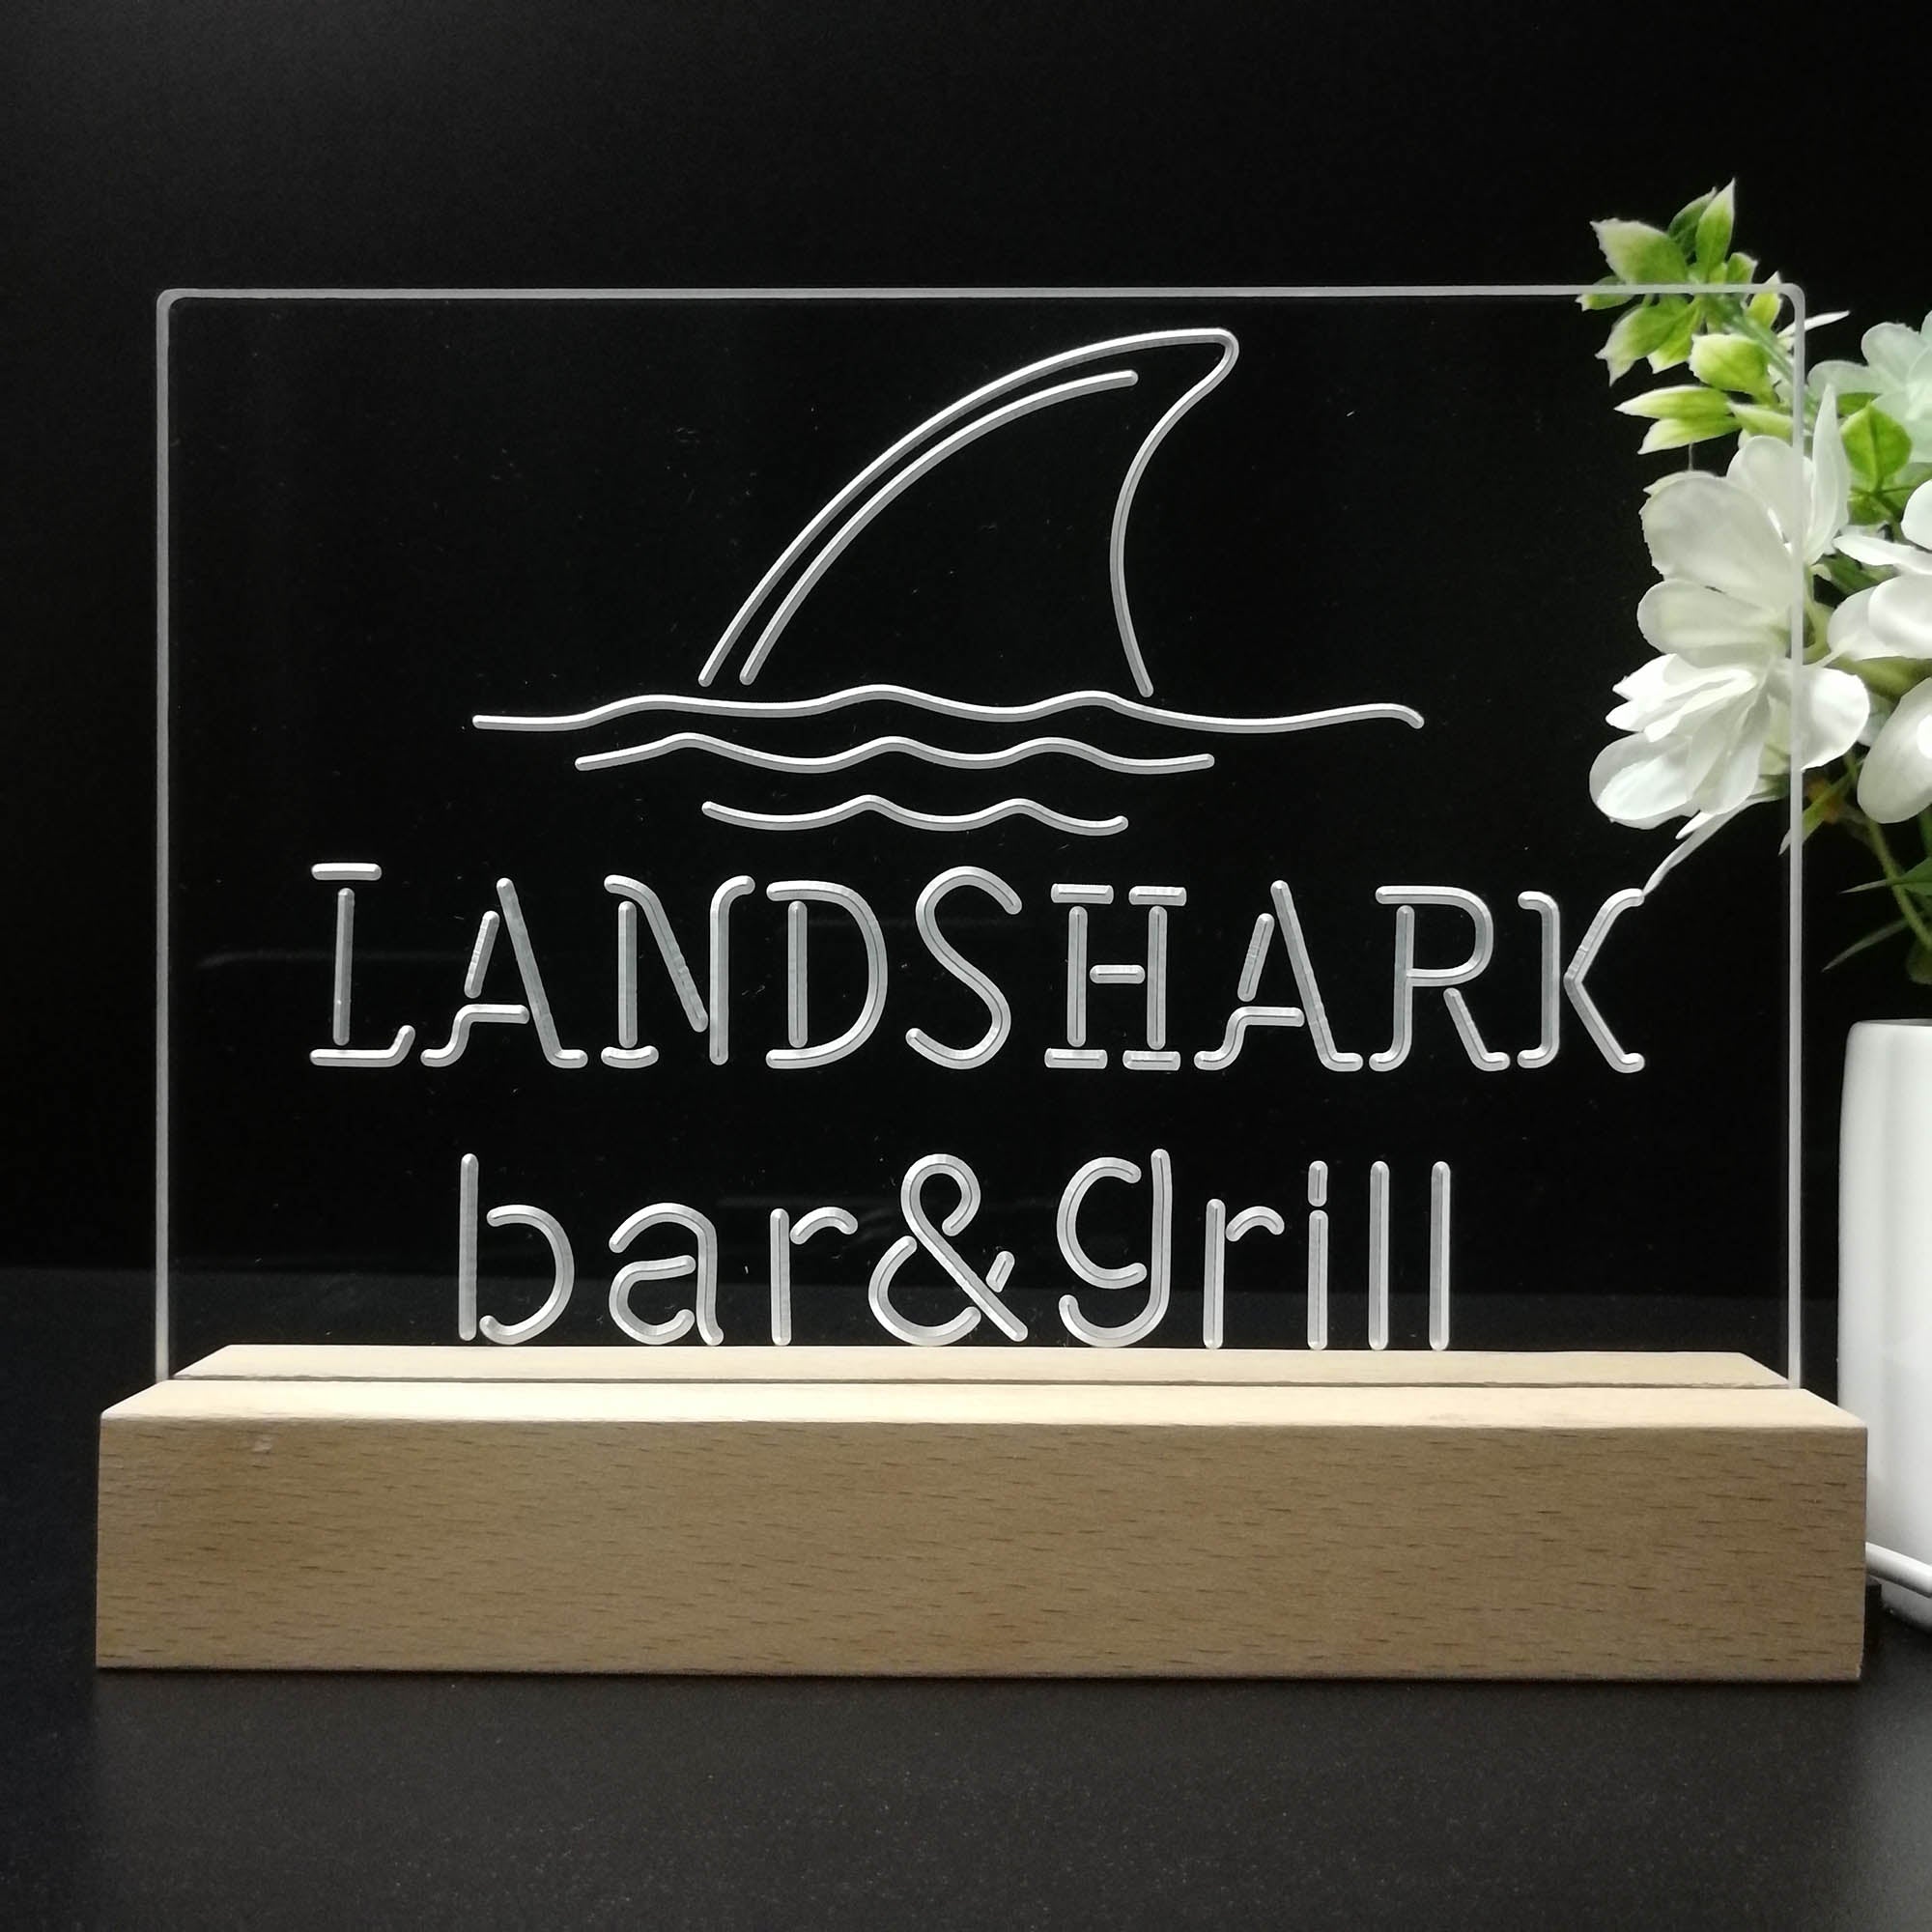 Landshark Bar and Grill Night Light LED Sign